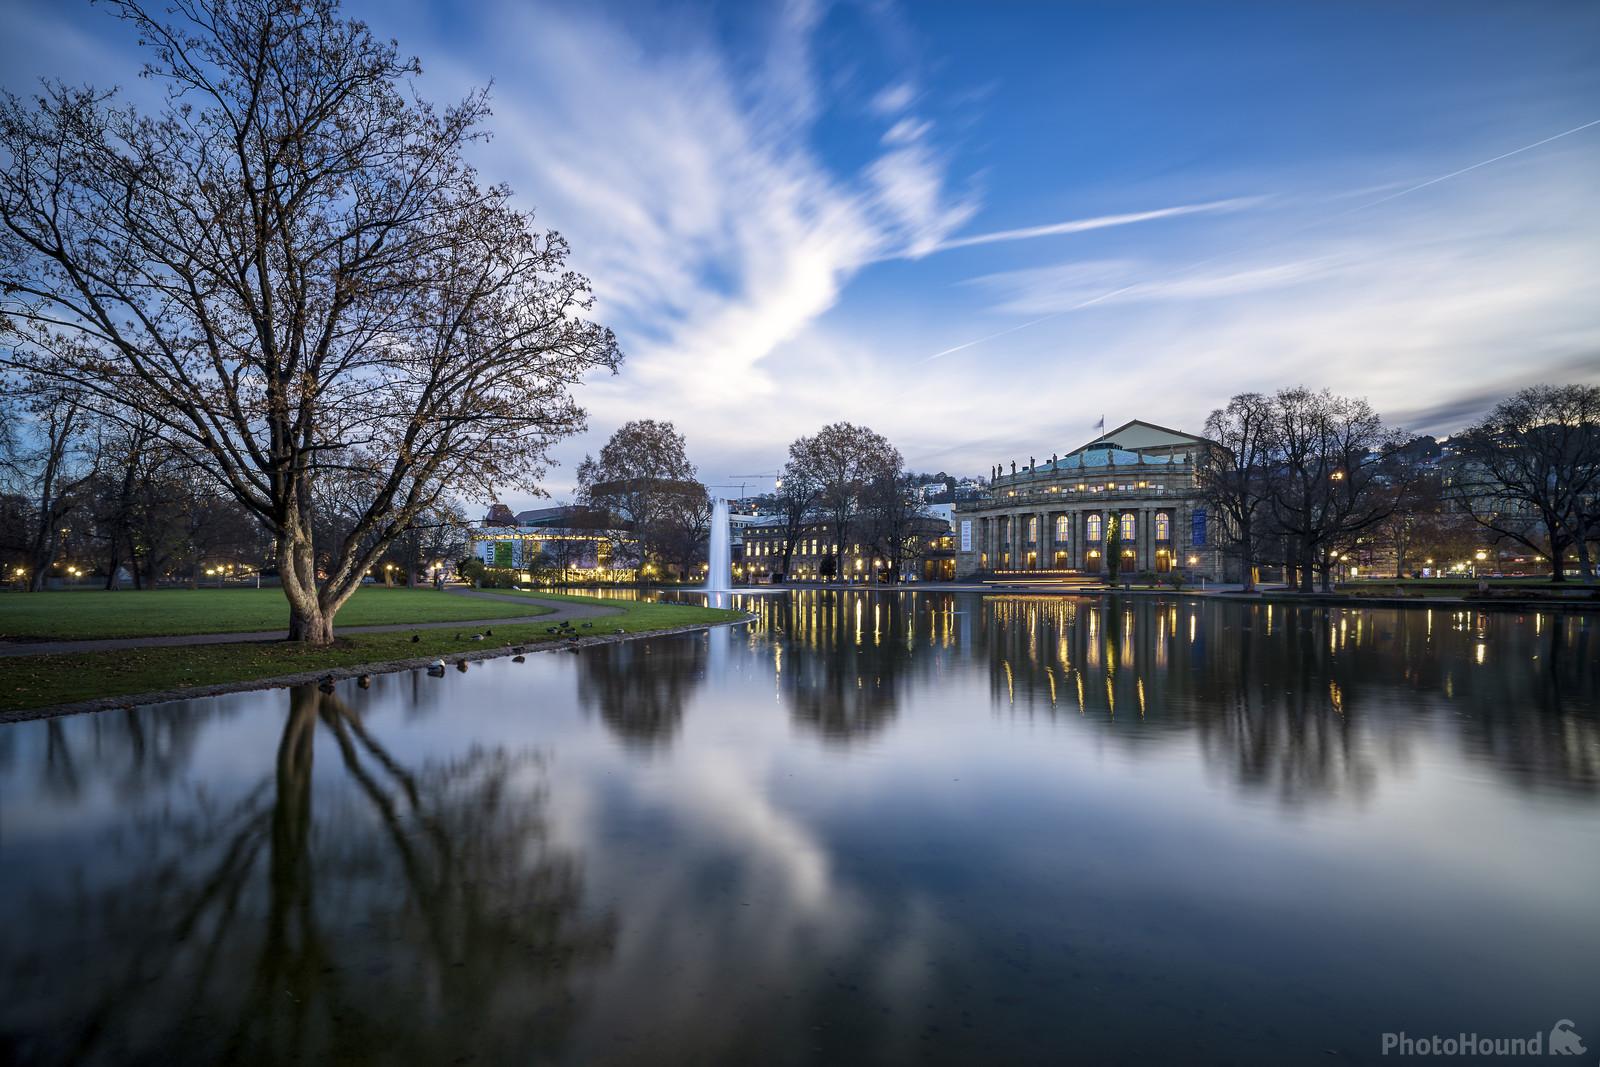 Image of Stuttgart Opera and Lake by Christian Klaus